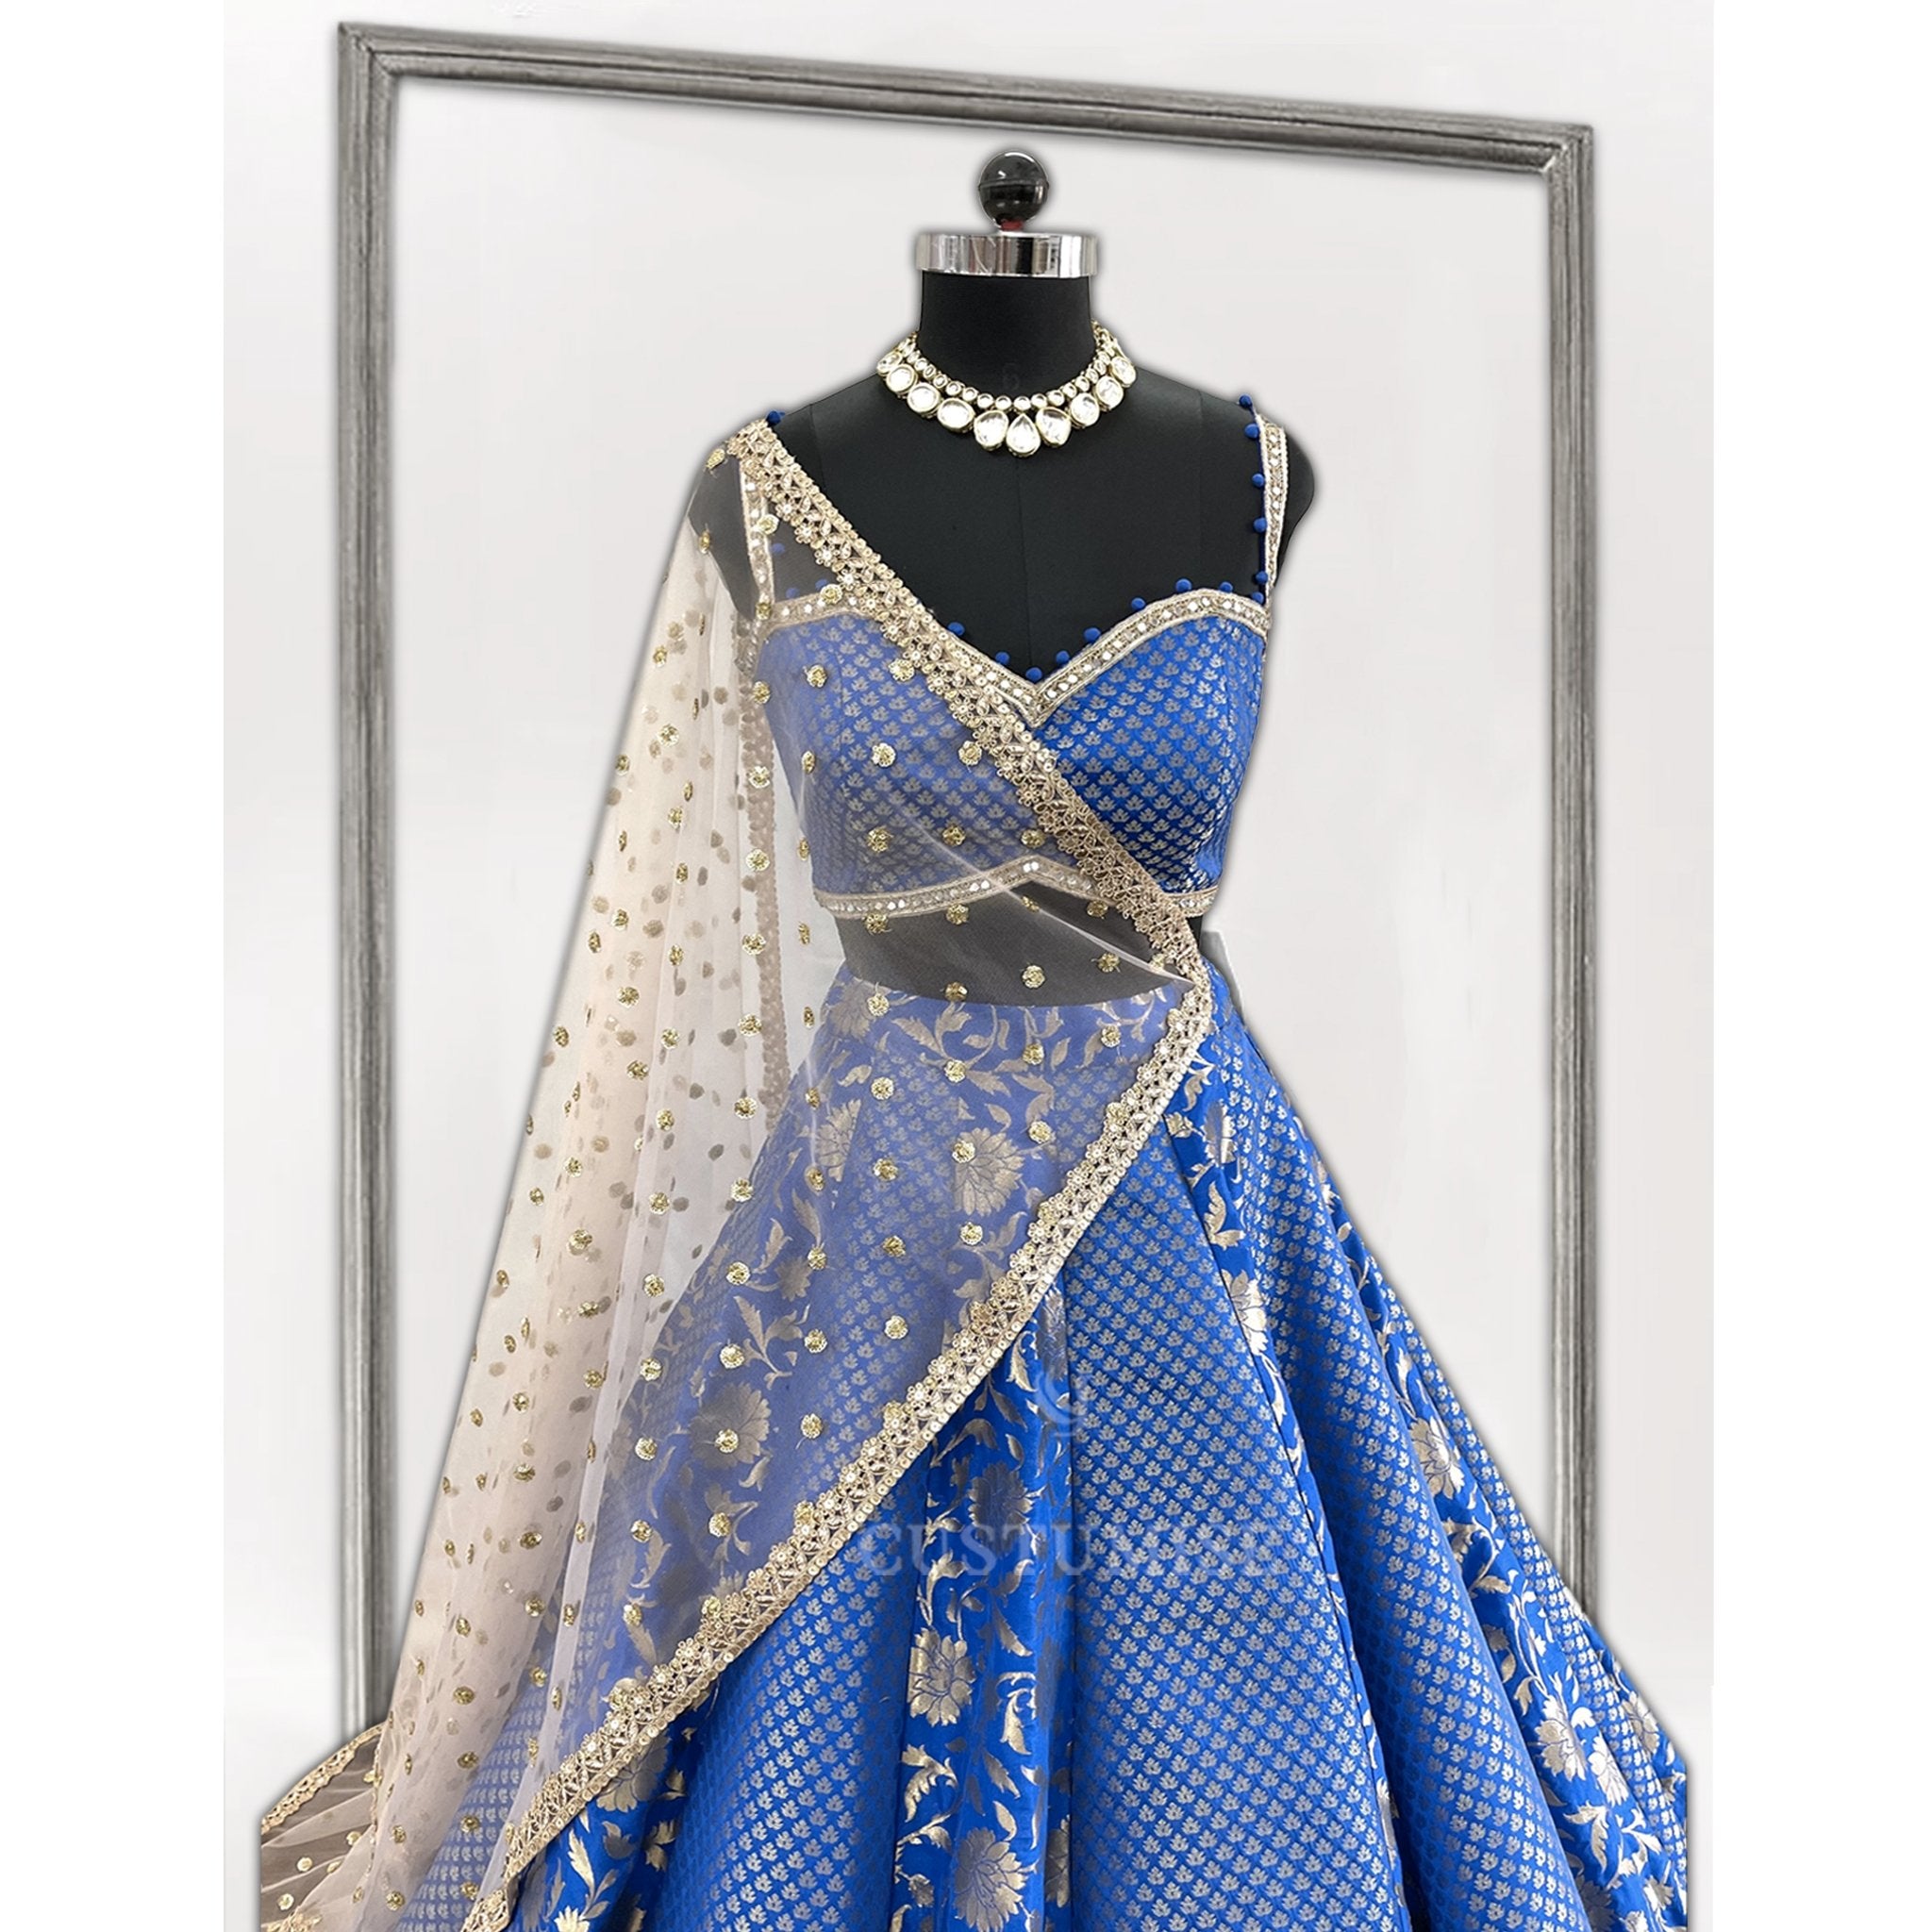 Royal Blue Banarsi Lehenga with Nude Pink Dupattta - Indian Designer Bridal Wedding Outfit